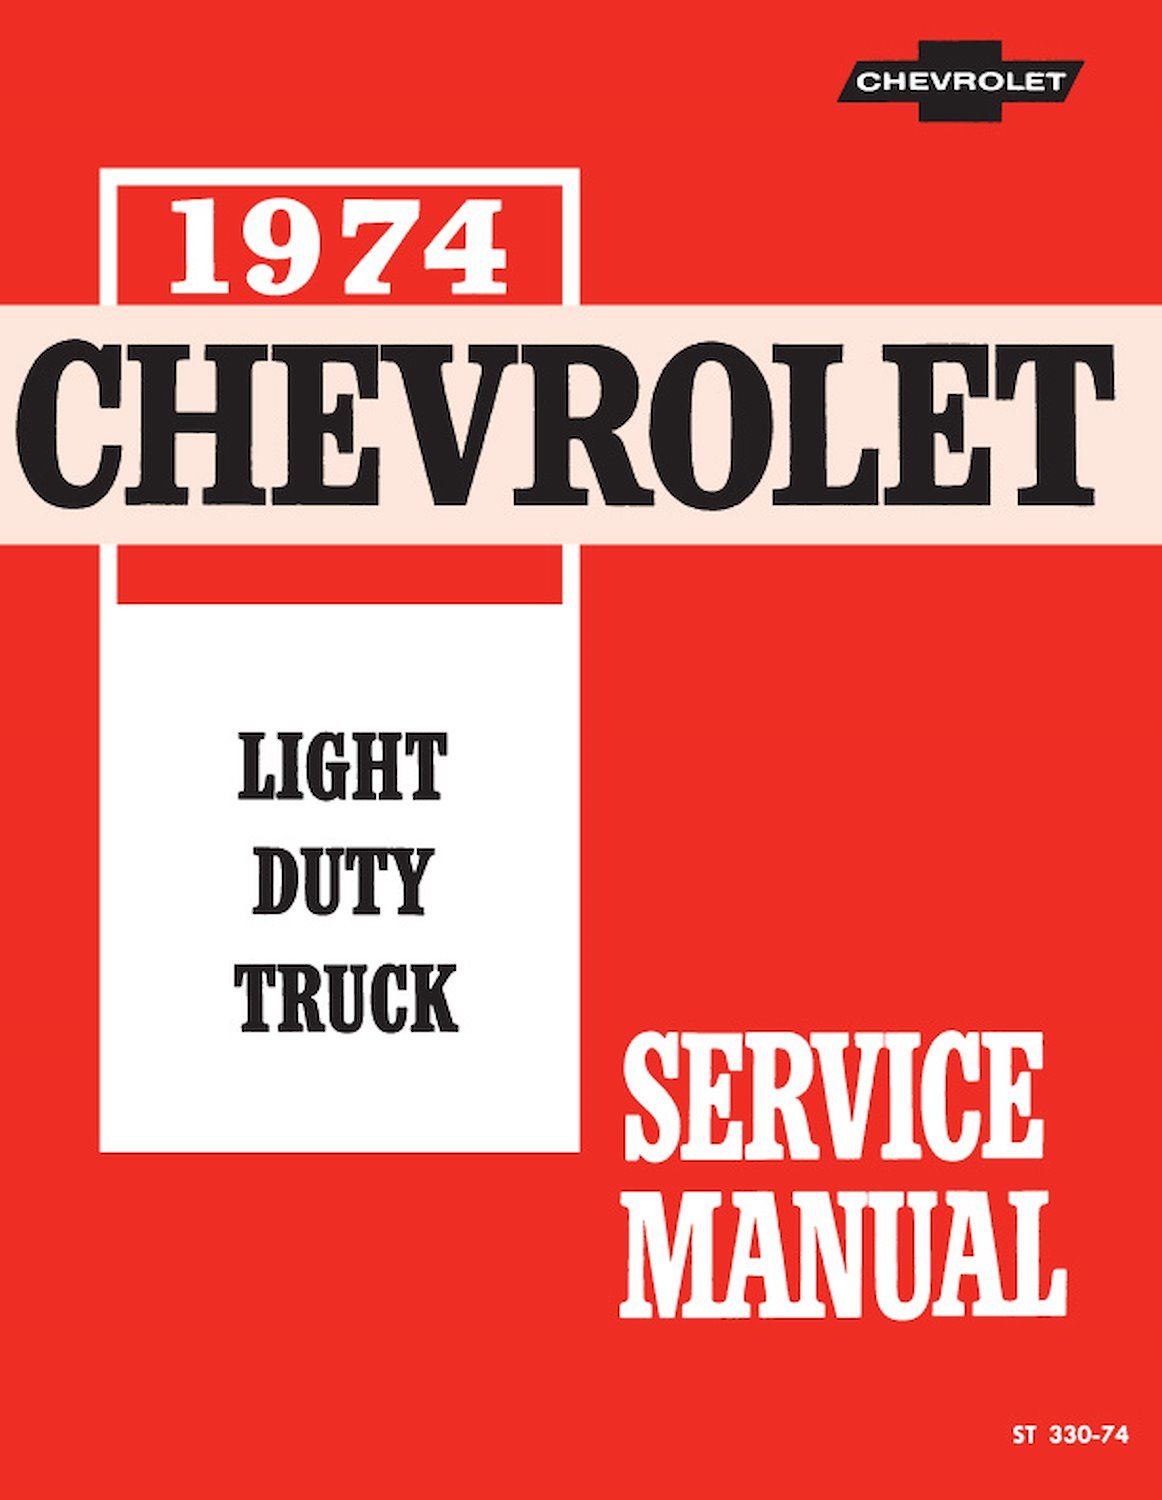 Shop Manual for 1974 Chevrolet Trucks